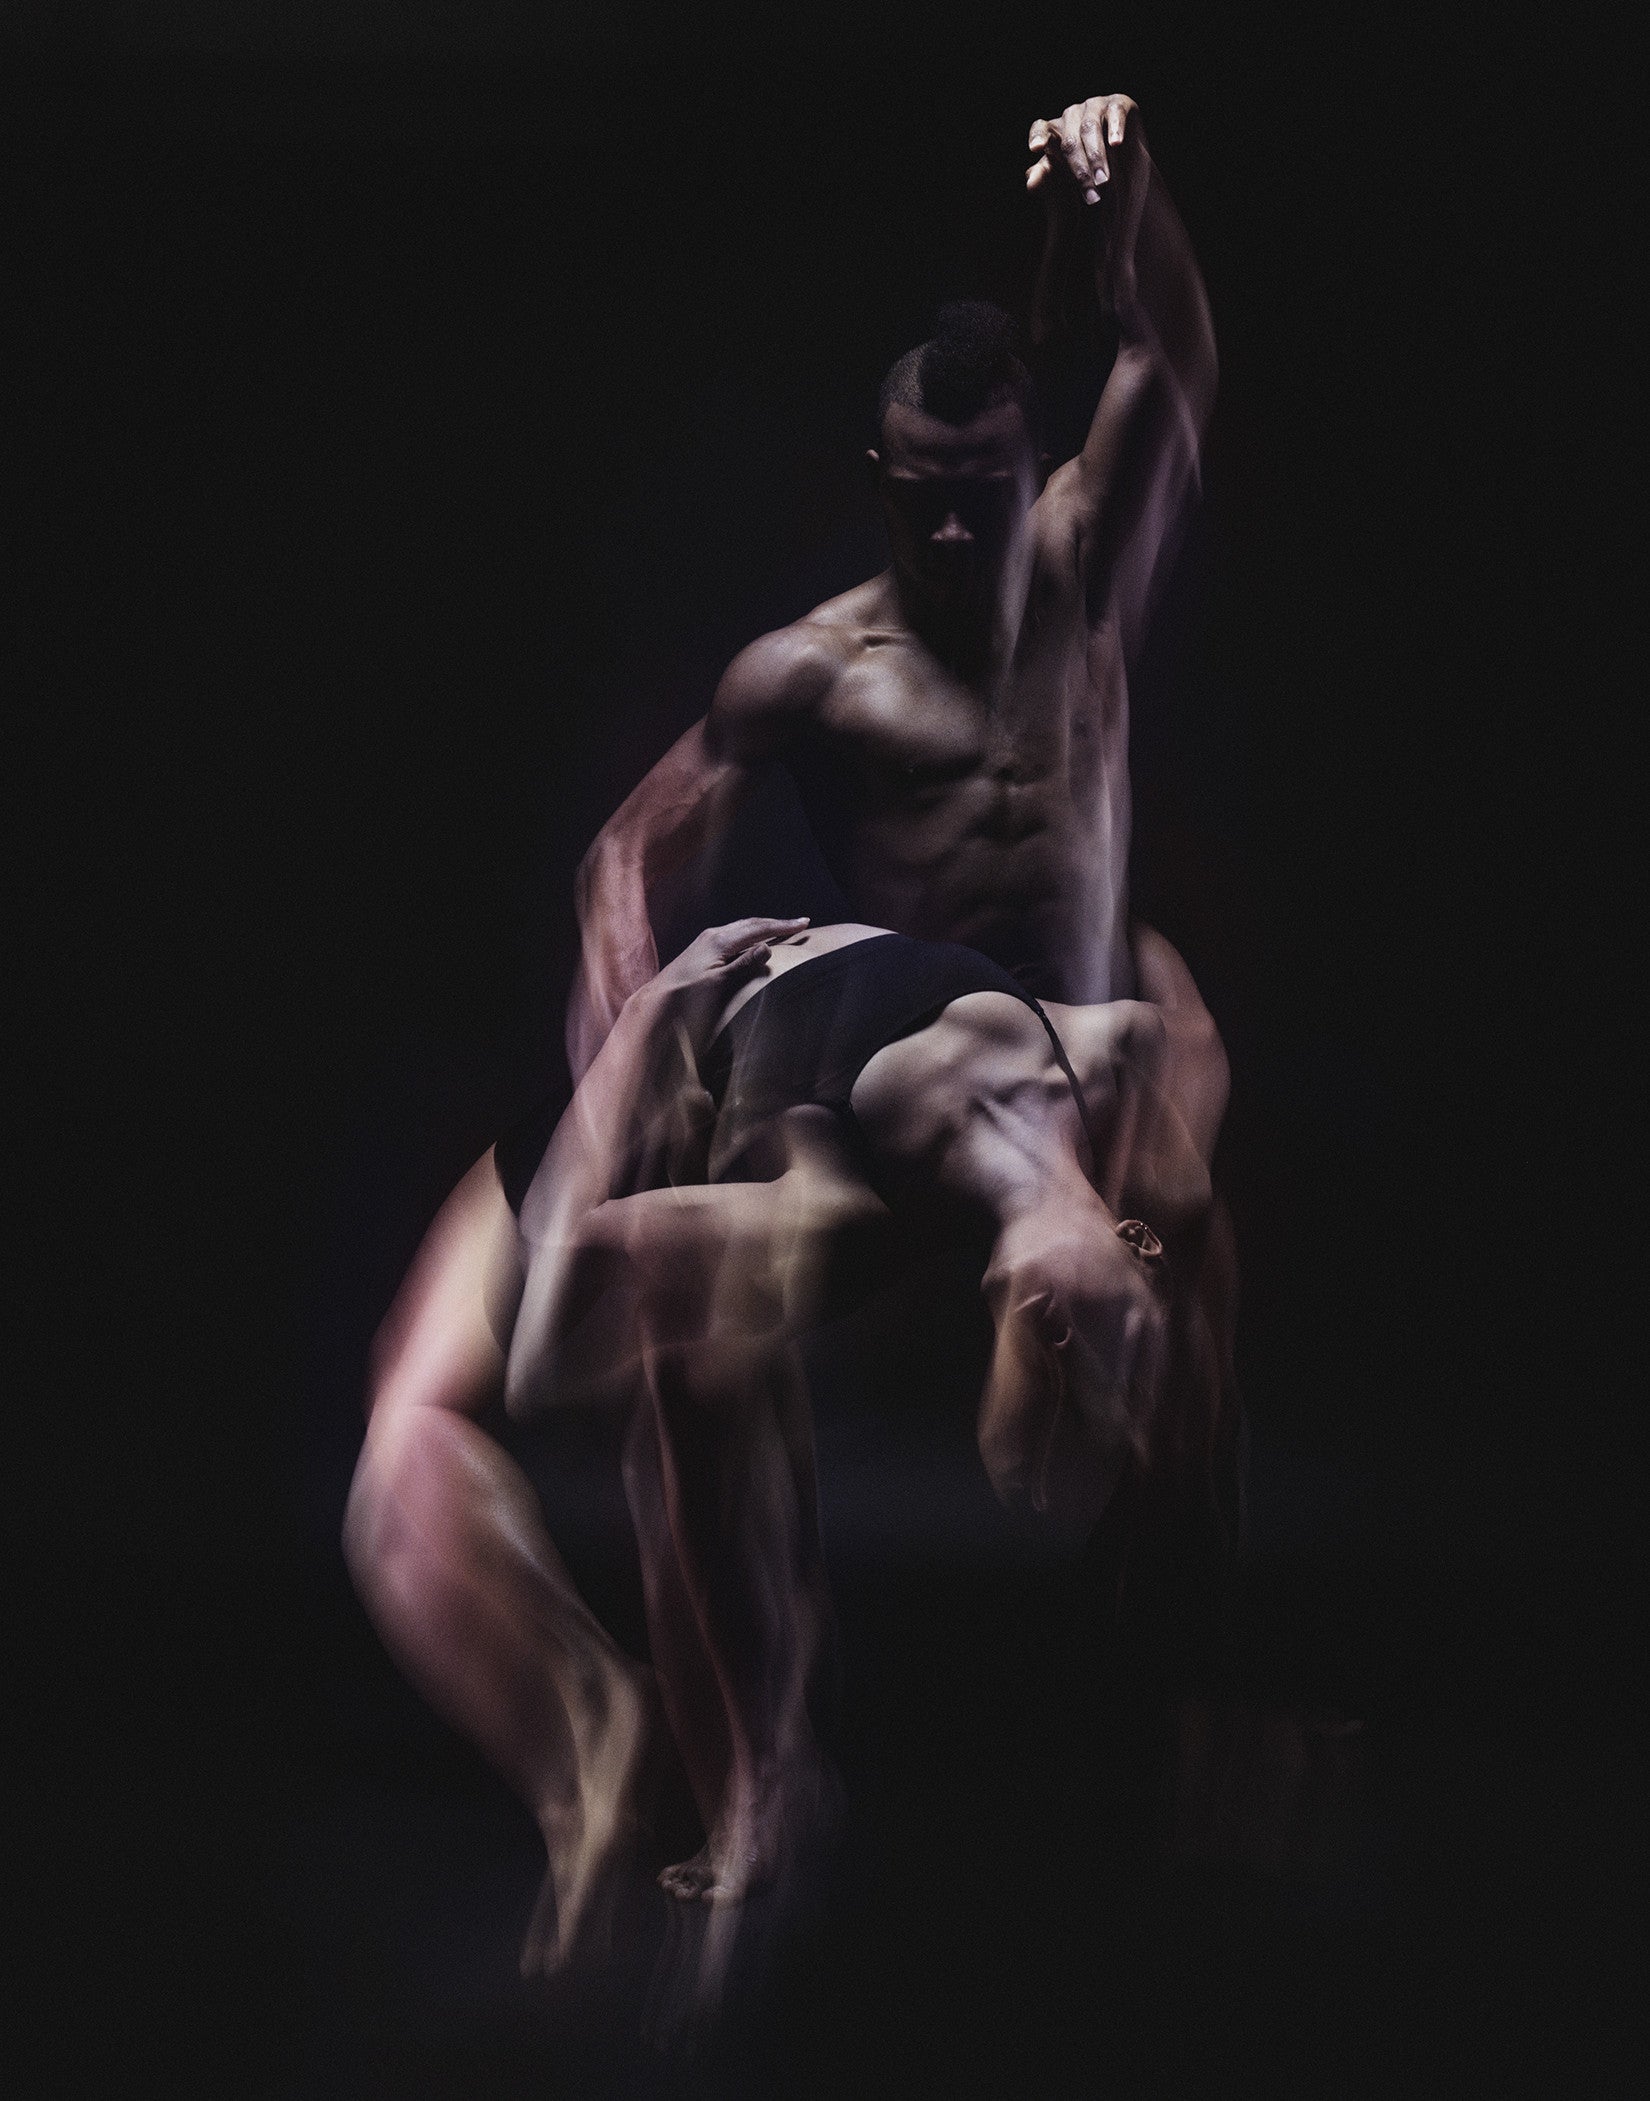 Dance by David Perkins